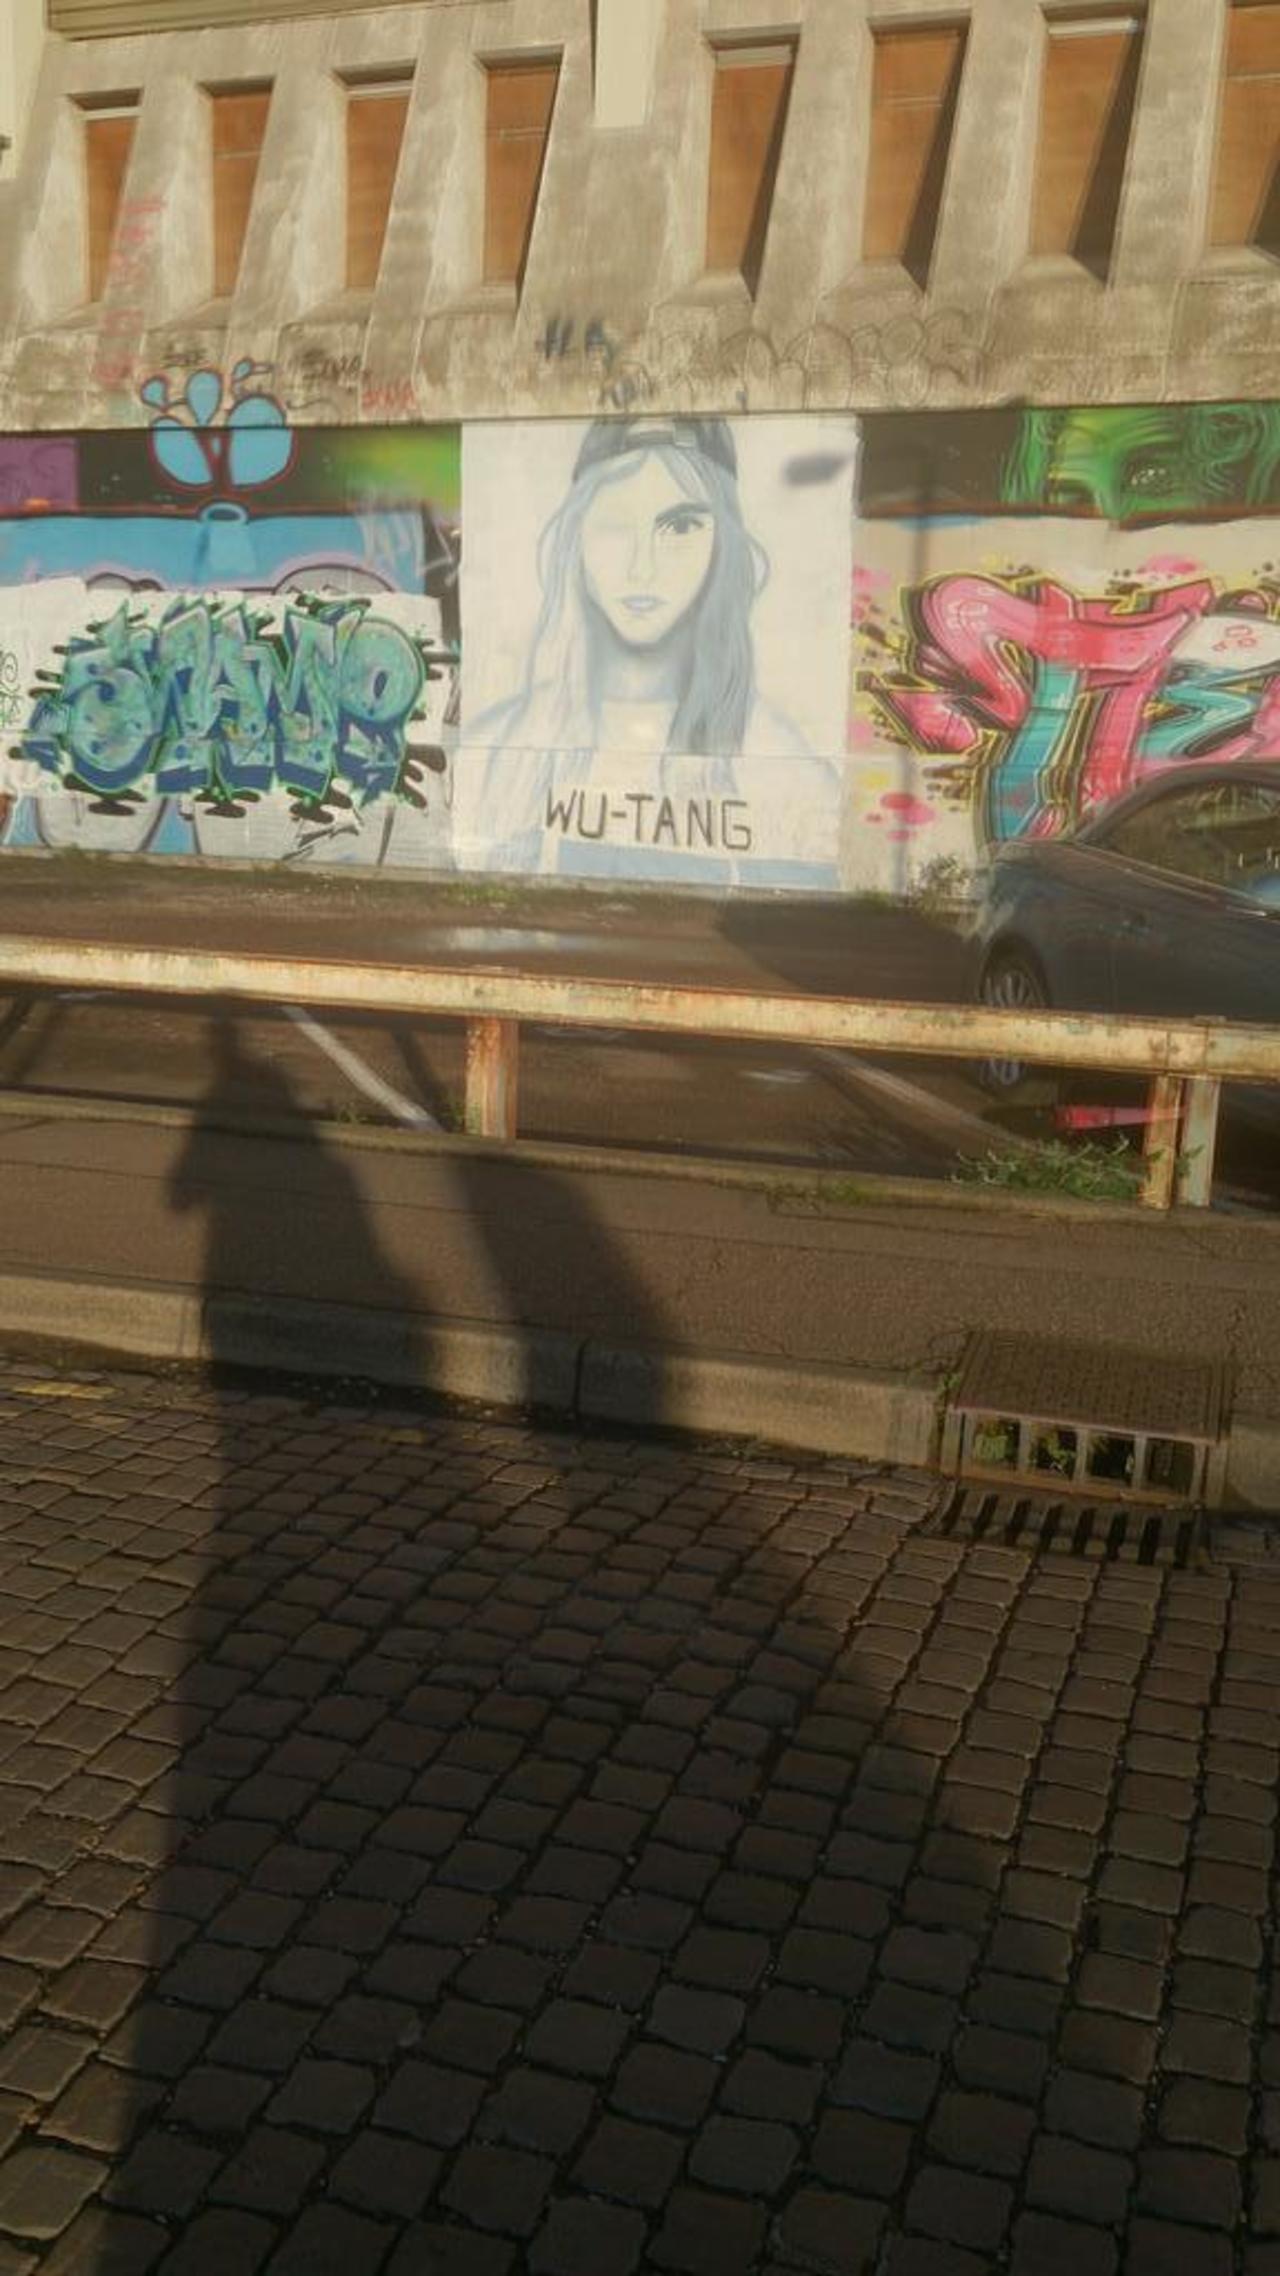 RT @NorwichGraffiti: Wu-Tang, Clan?

#NorwichGraffiti #NorwichStreetart #Graffiti #Streetart #SprayPaint #Mural #Graff #ArtoftheBrick http://t.co/IgTasTdump